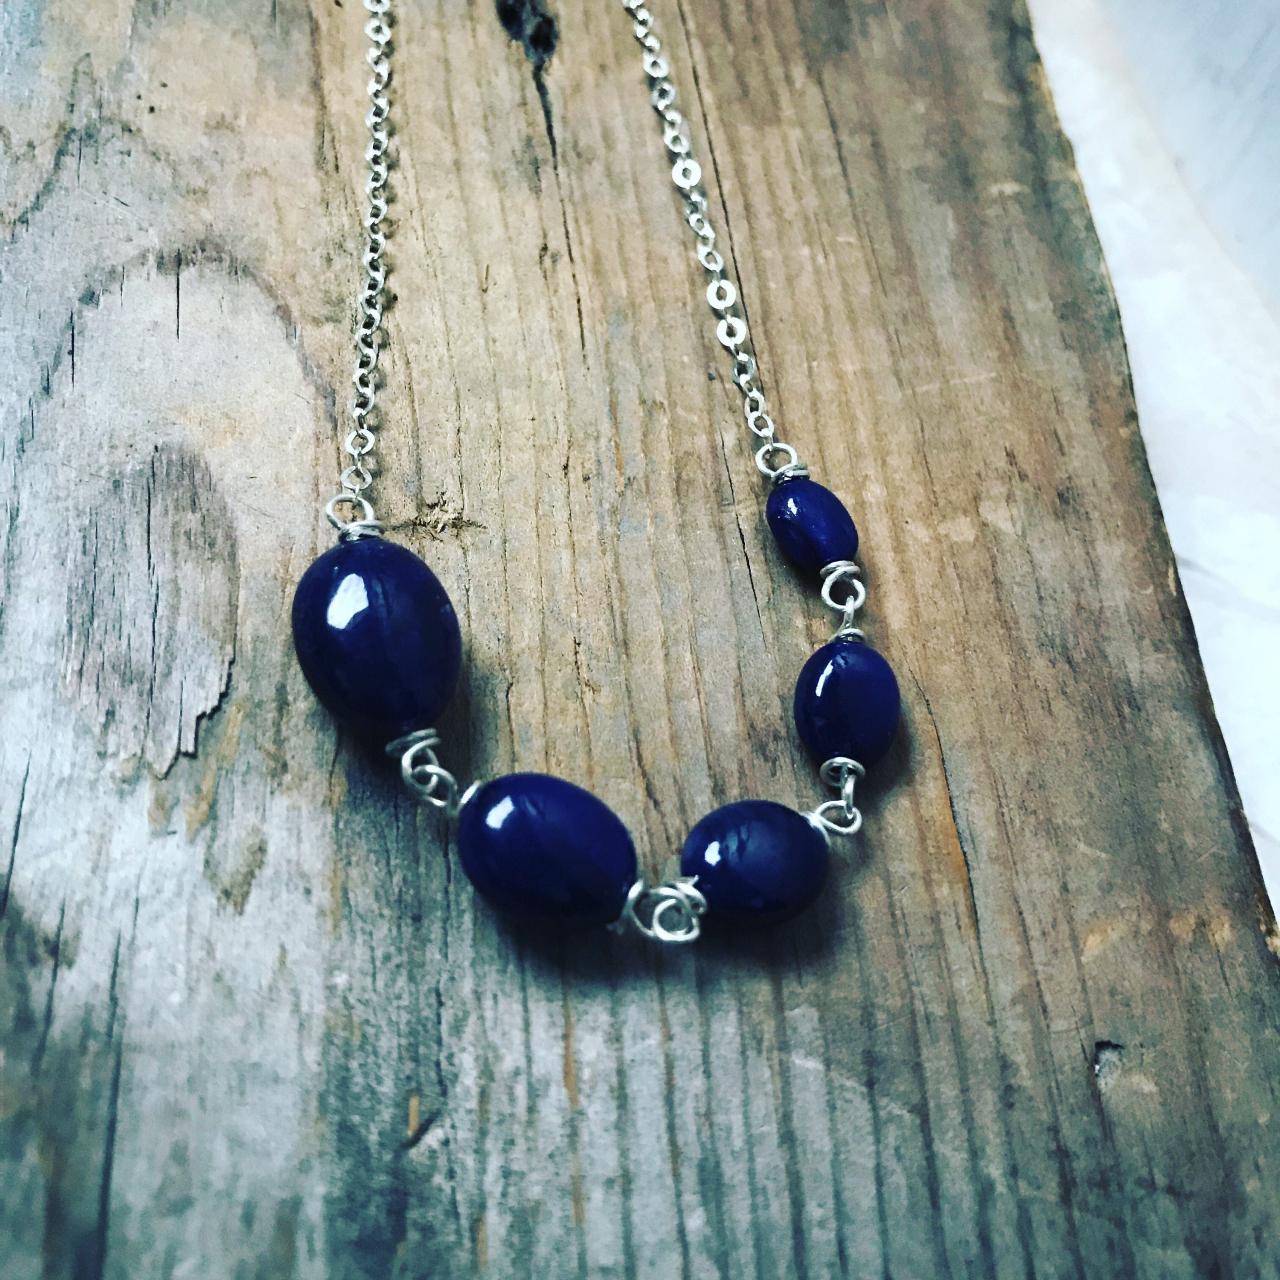 Sapphire Necklace, Sterling Silver Wire Wrapped, Dark Blue Jewelry, Gemstone September Birthstone.